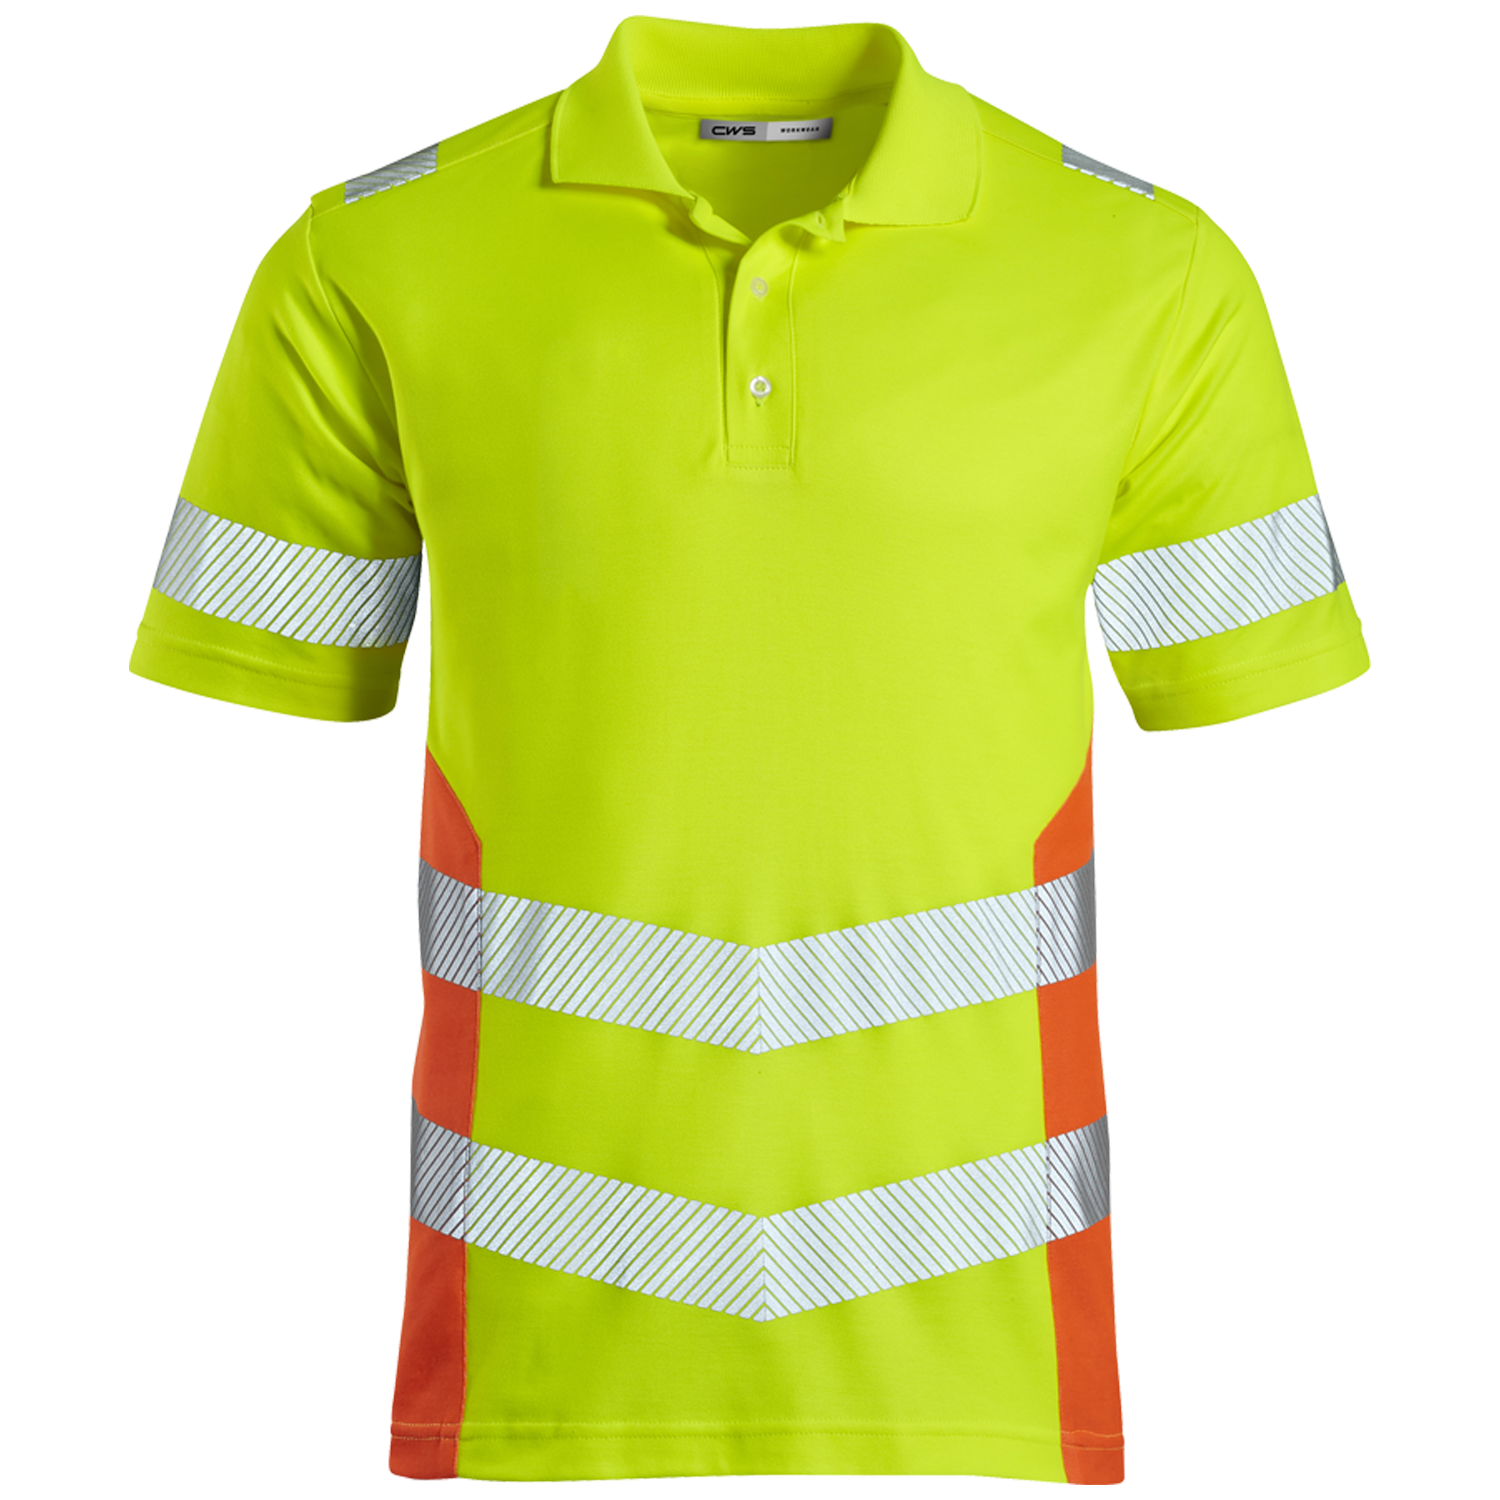 CWS Core HighVis Poloshirt HighVis Yellow/HighVis Orange w/ Reflective Stripes short sleeves